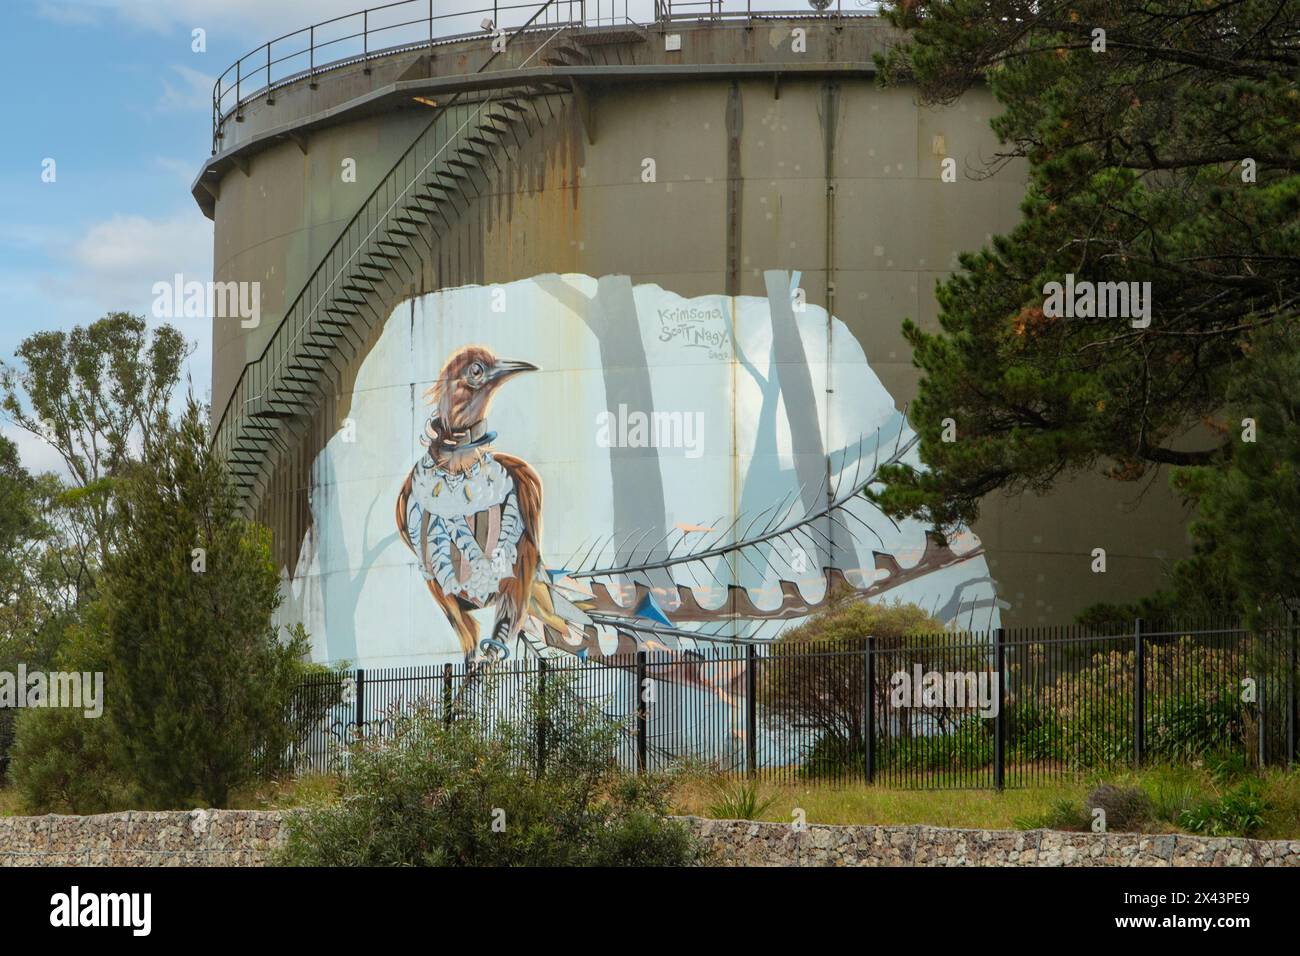 Water Tank Art par Scott Nagy et Janne Birkner, Wentworth Falls, NSW, Australie Banque D'Images